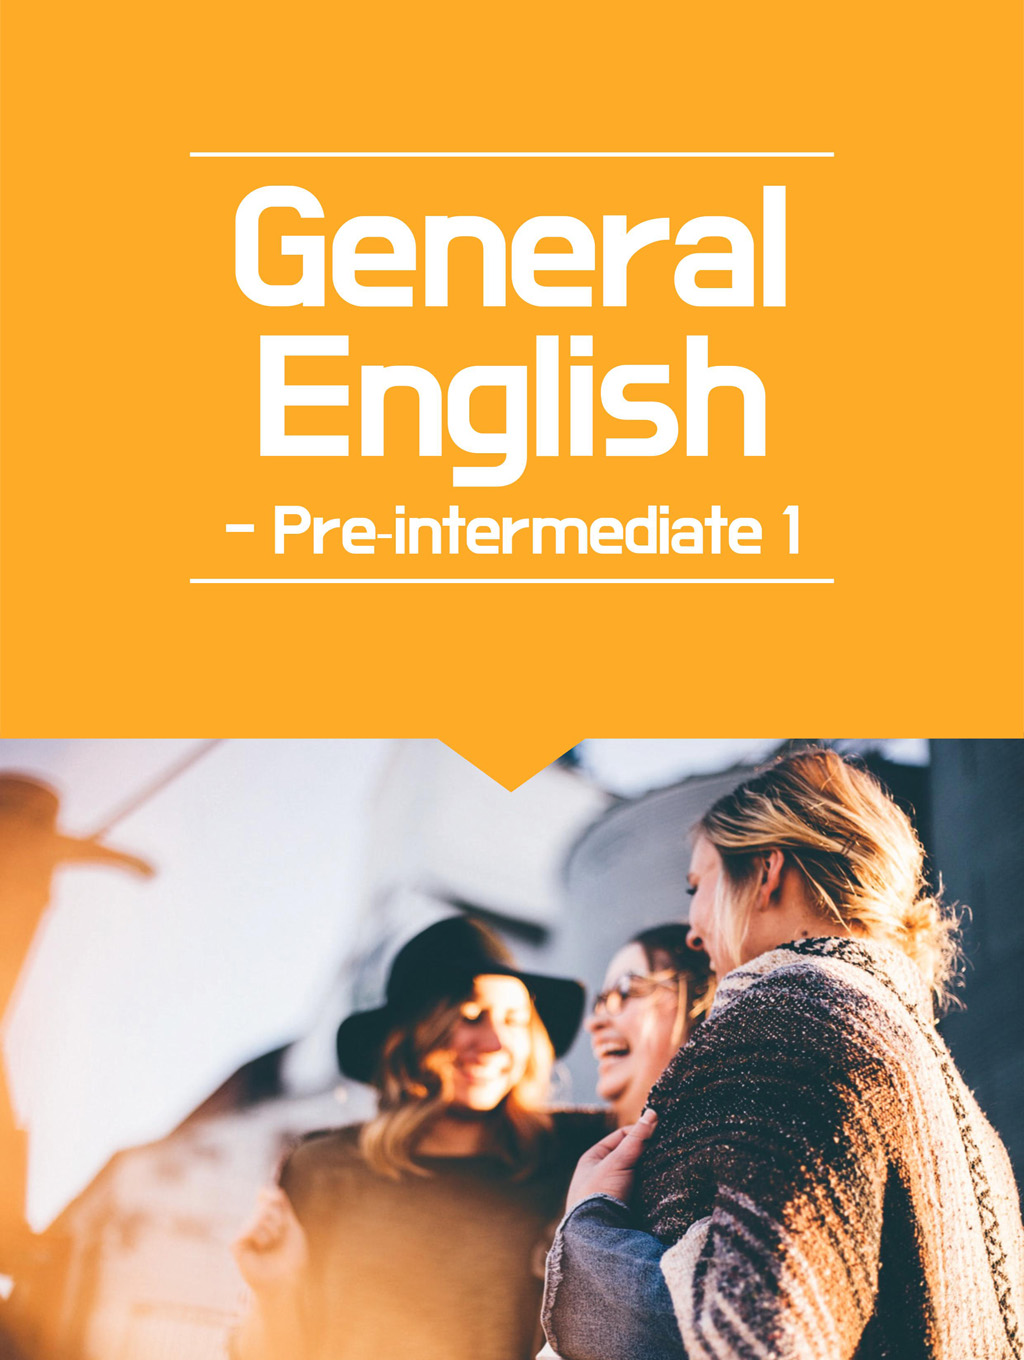 General English - Pre-intermediate 1